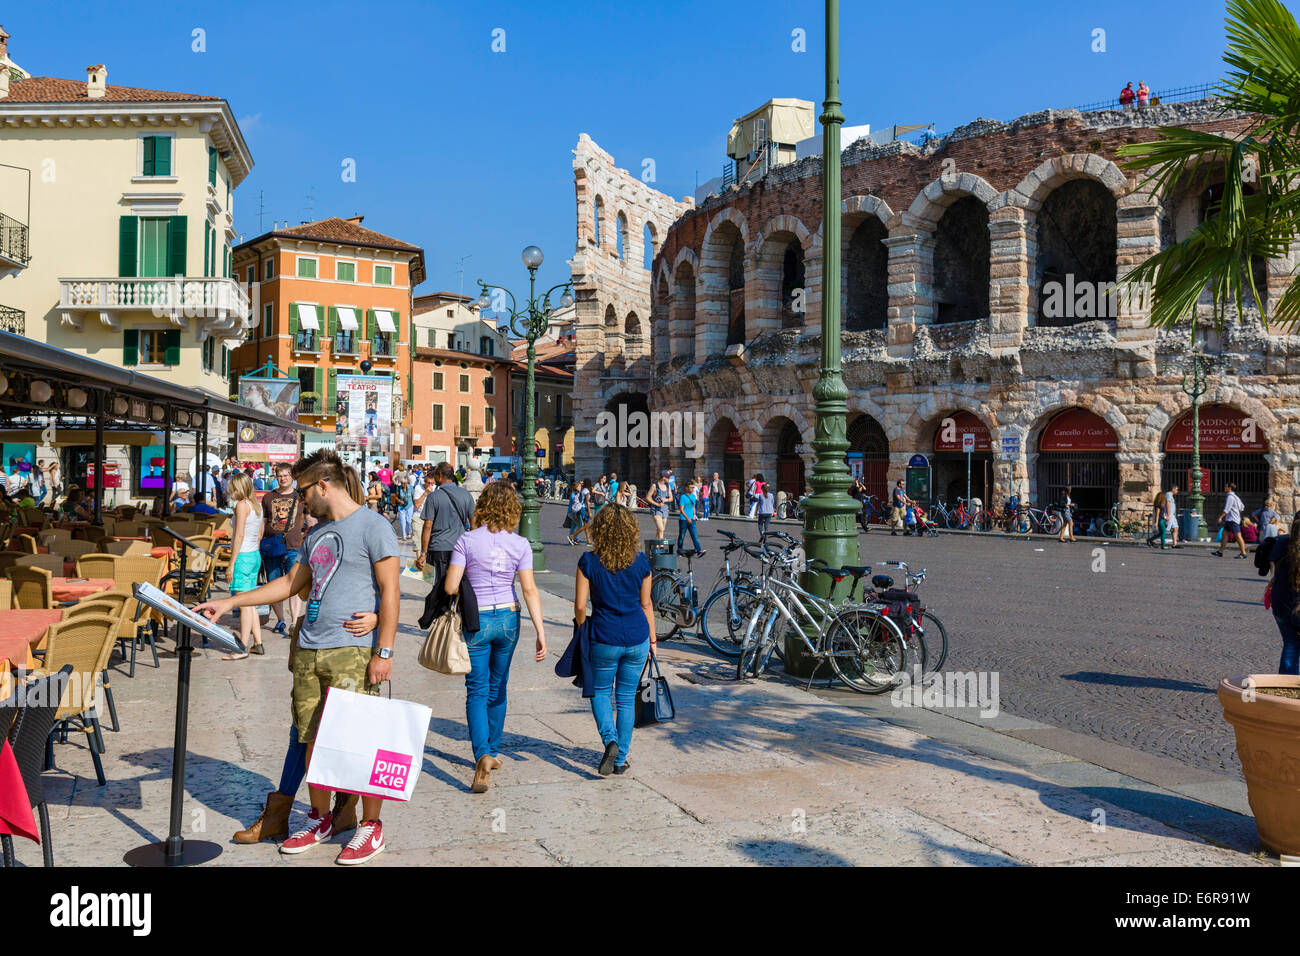 Restaurants in front of the Arena, Piazza Bra, Verona, Veneto, Italy Stock Photo